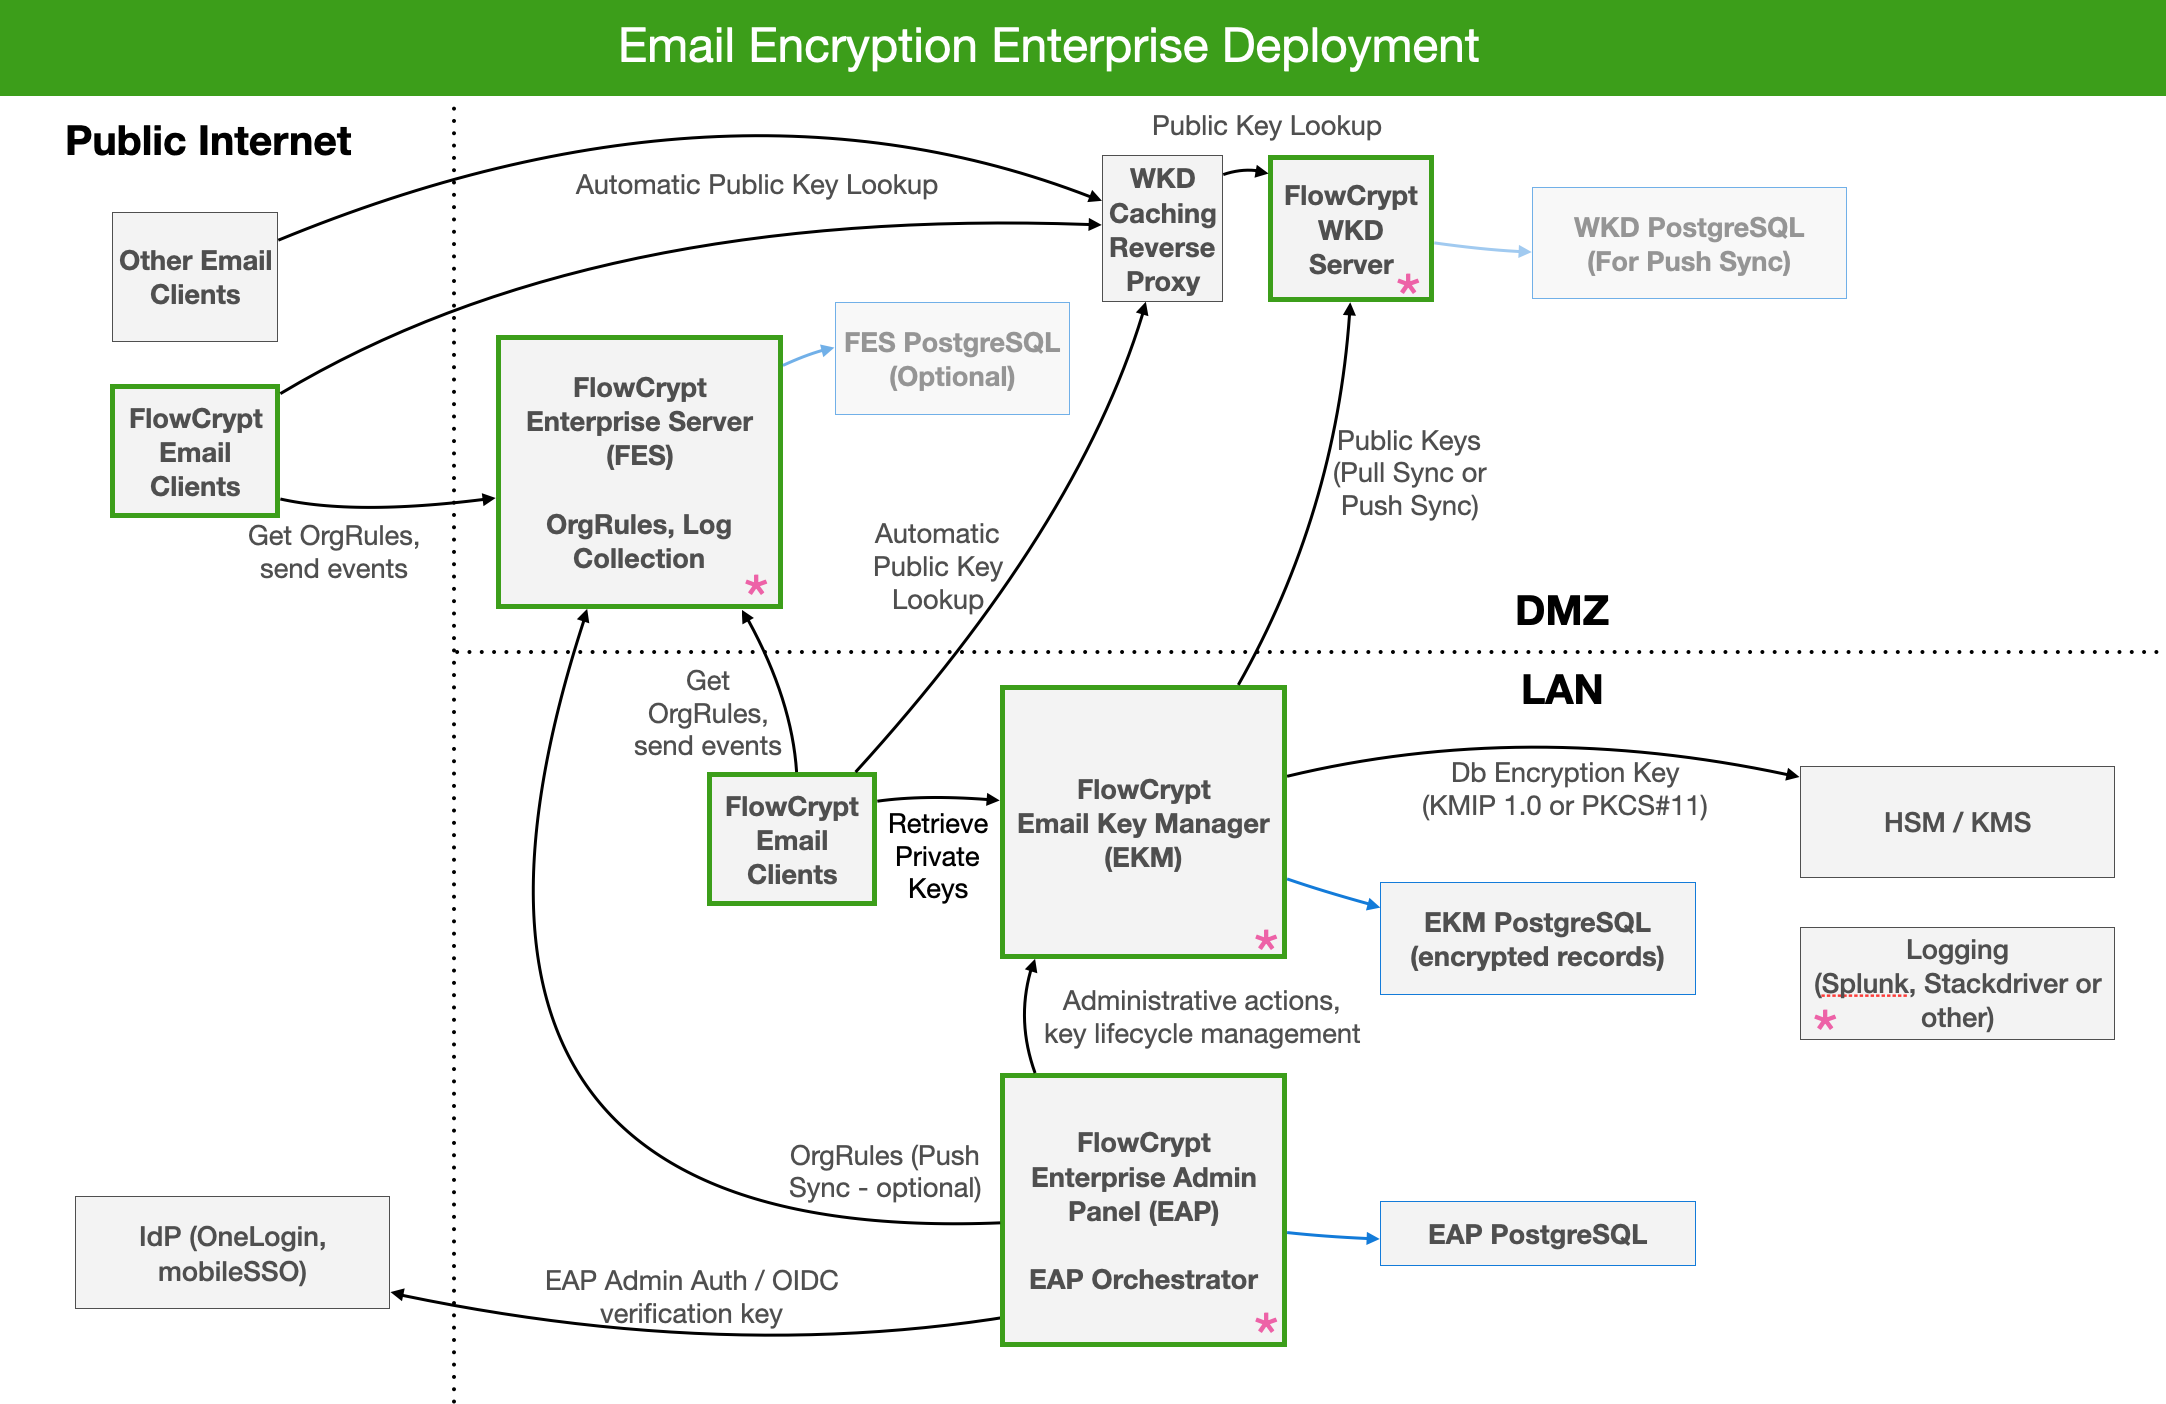    email encryption deployment